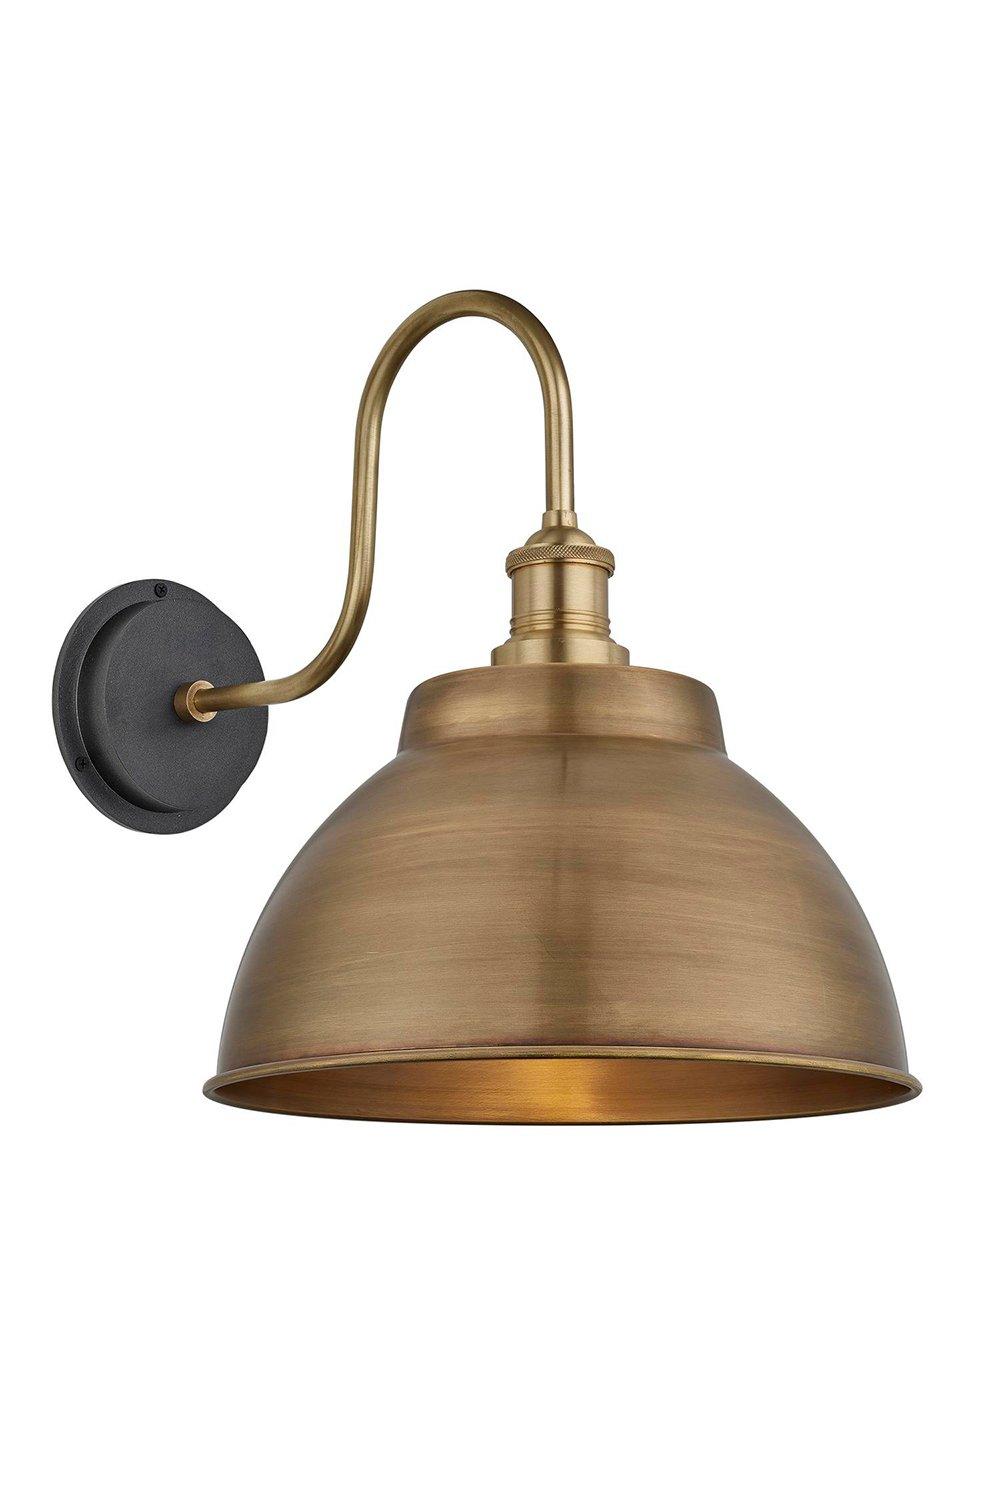 Swan Neck Outdoor & Bathroom Dome Wall Light, 13 Inch, Brass, Brass Holder